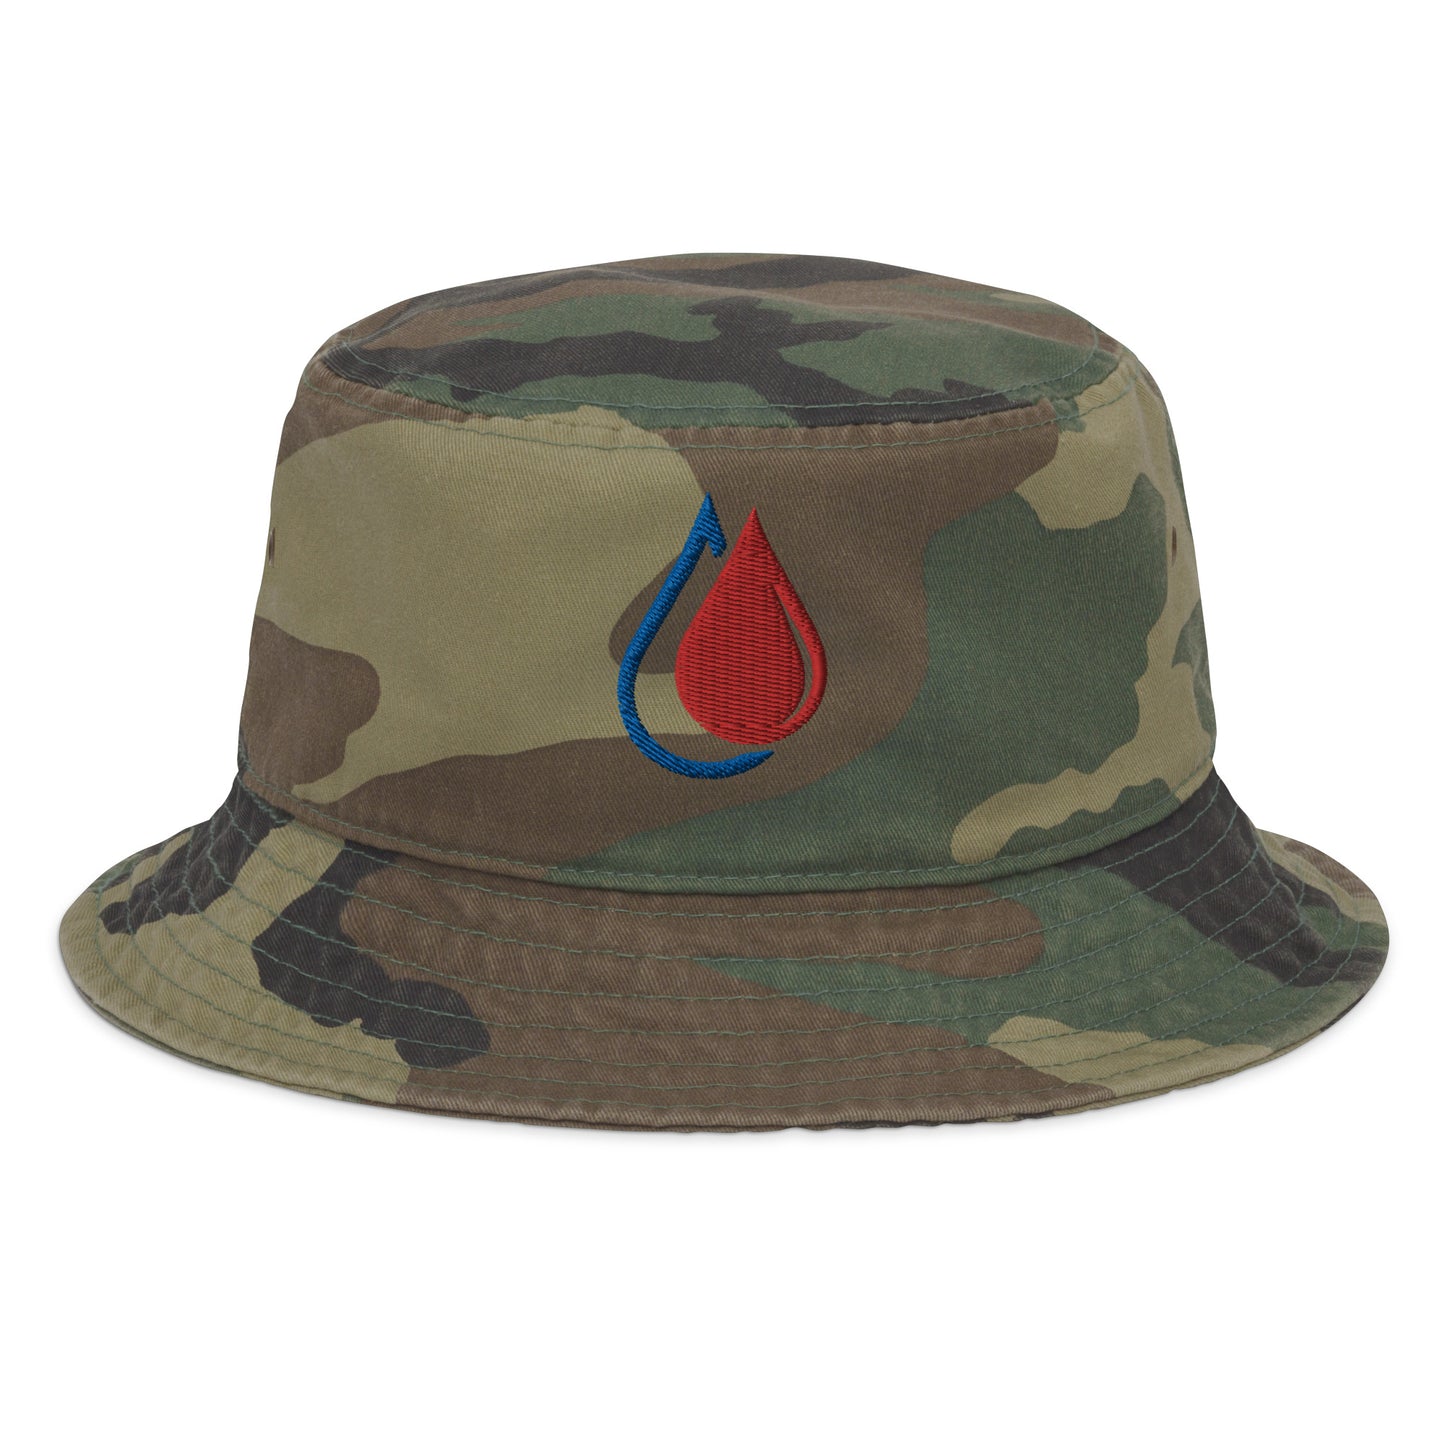 Blood & Water Fashion Bucket Hat